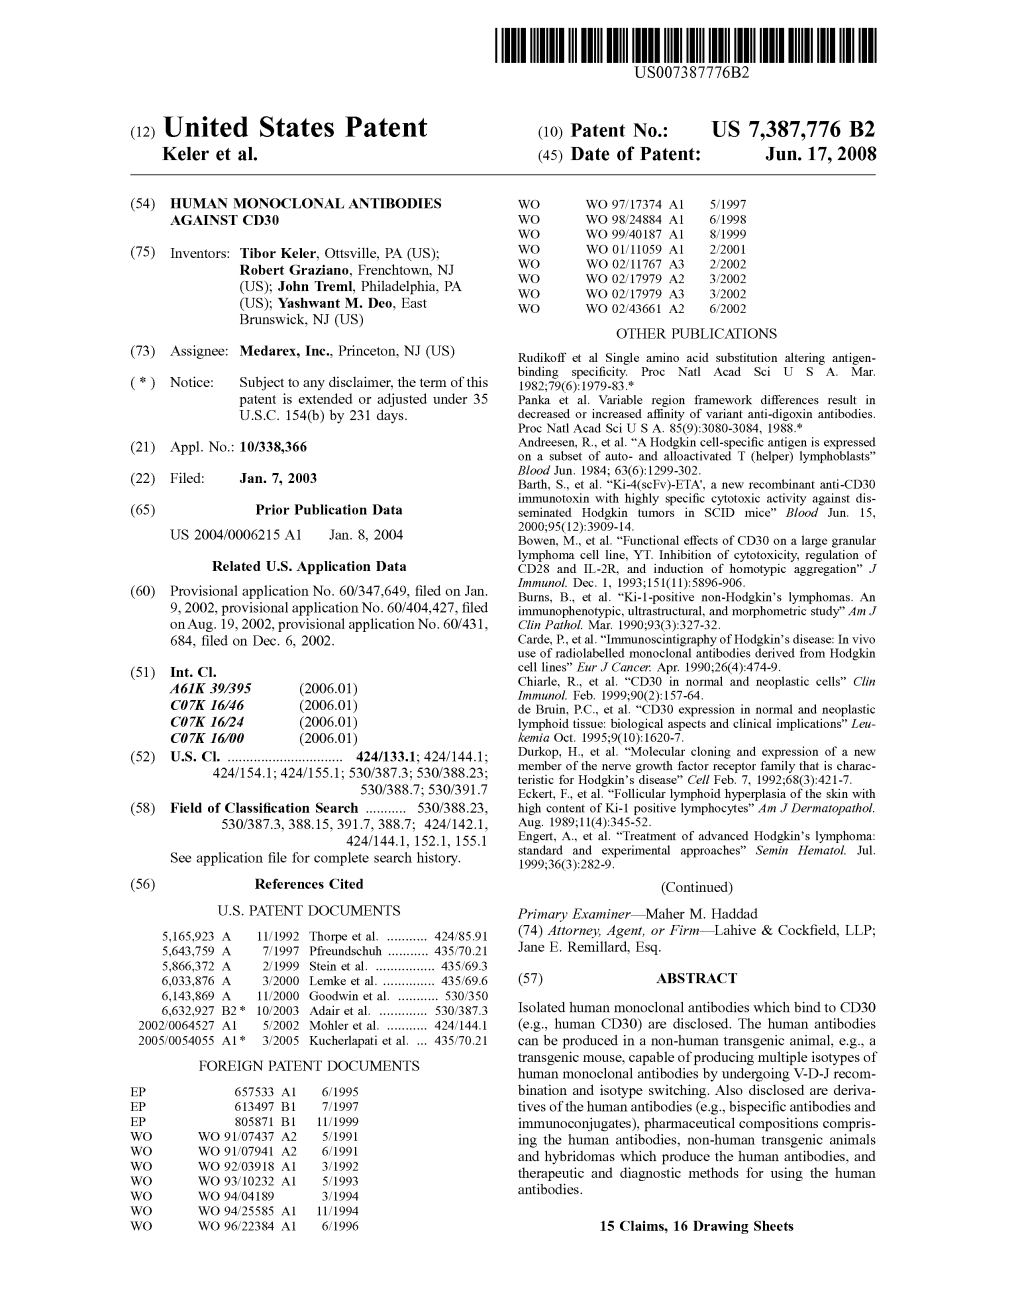 (12) United States Patent (10) Patent No.: US 7,387,776 B2 Keller Et Al